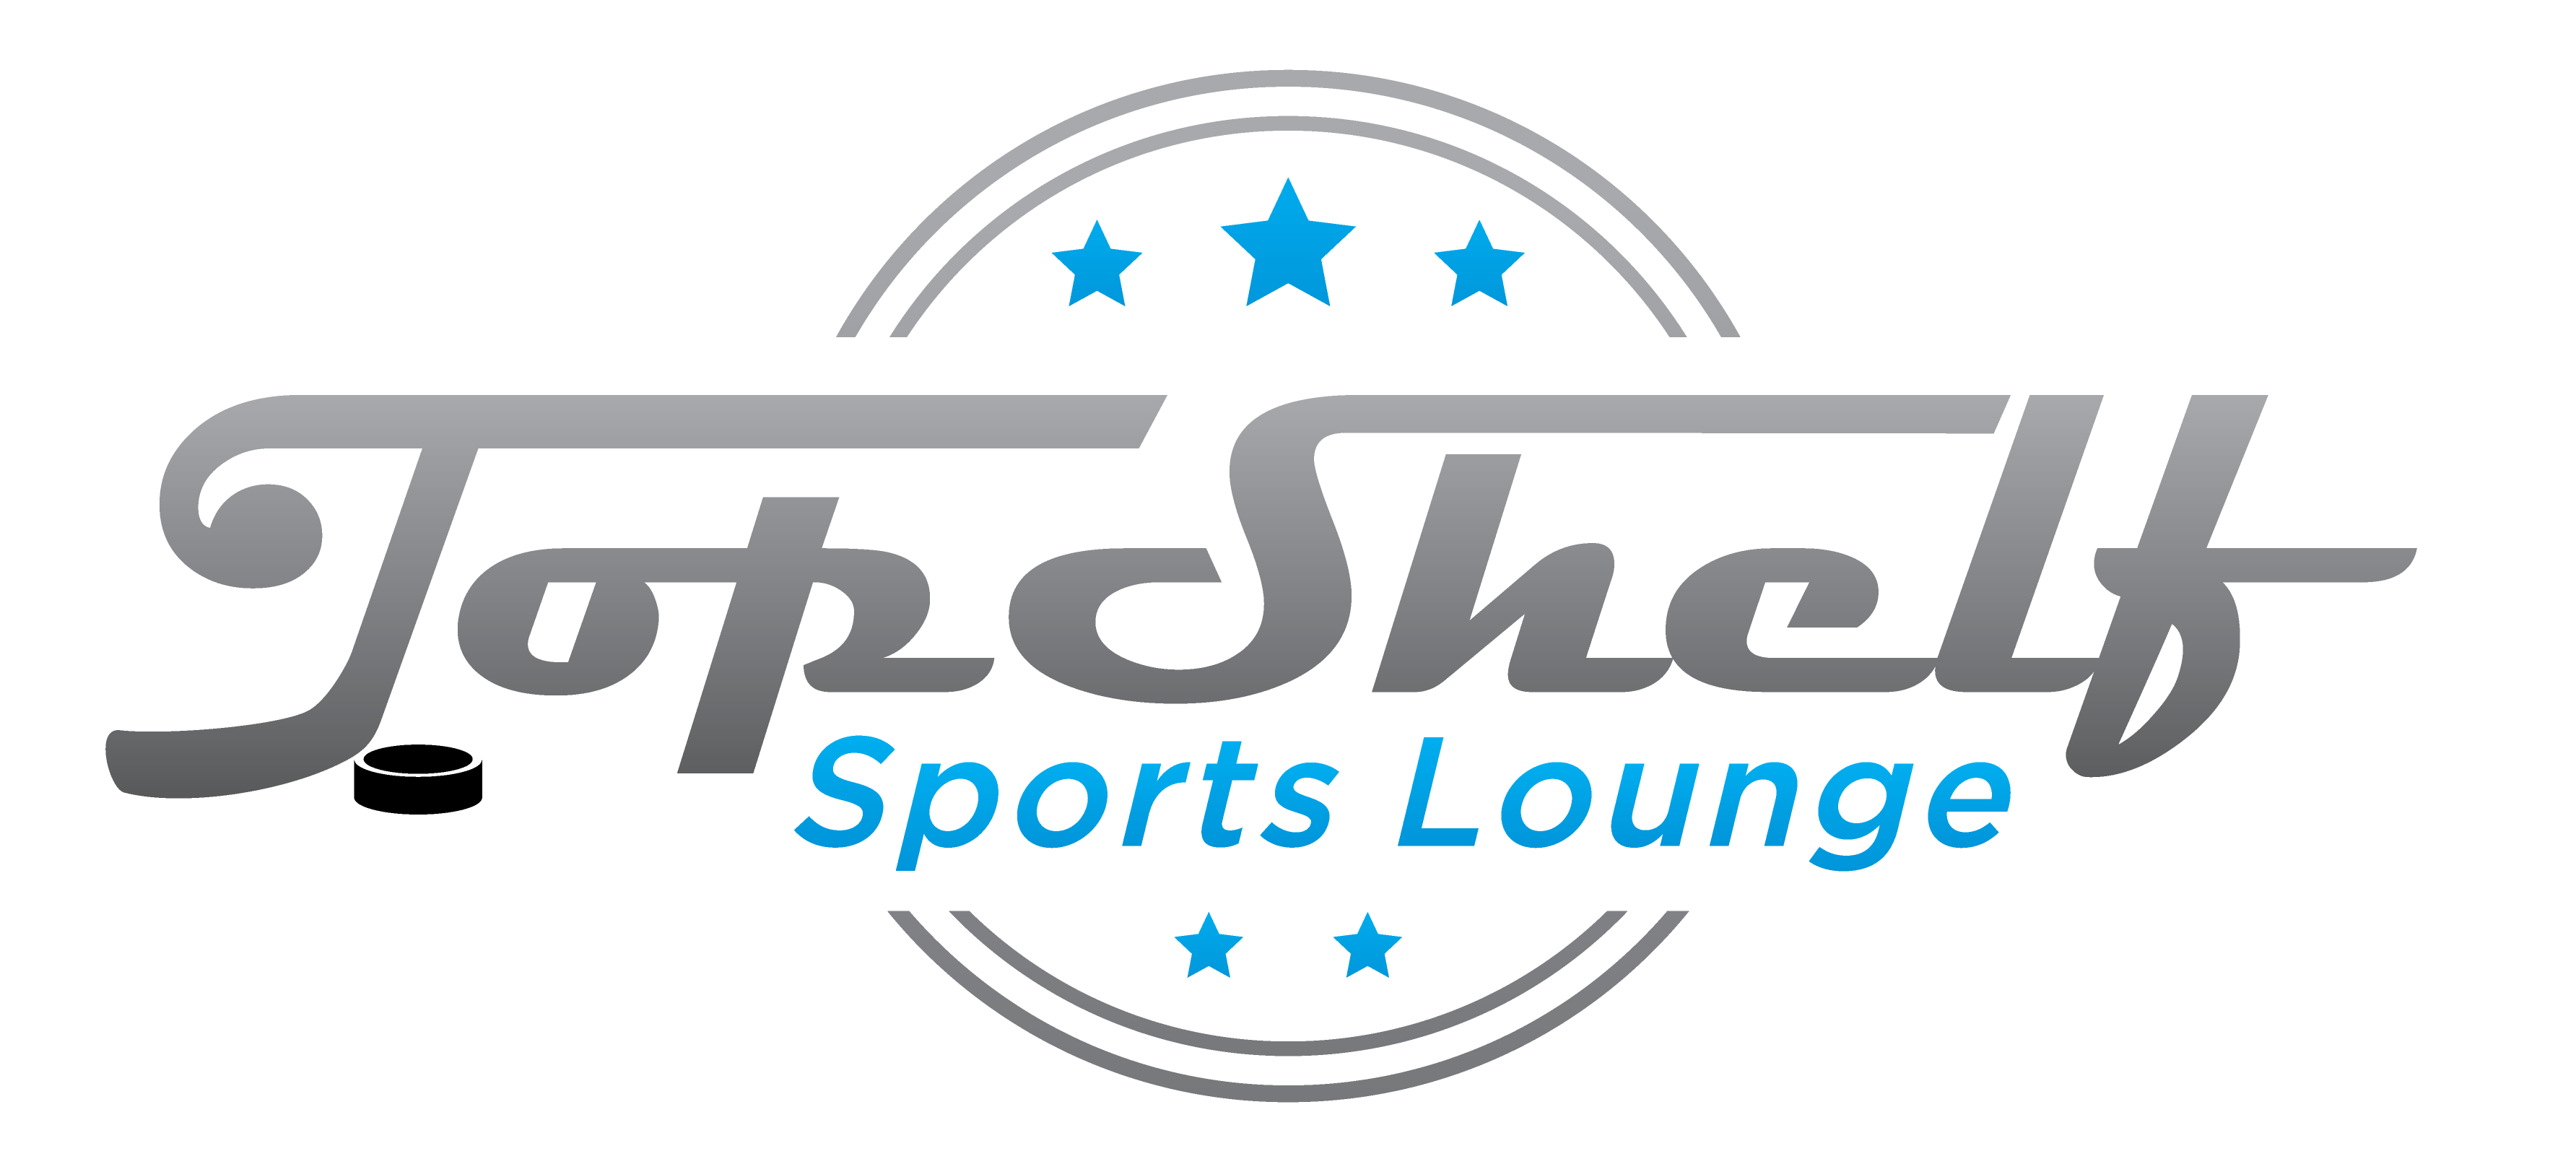 Top Shelf Sports Lounge logo top - Homepage